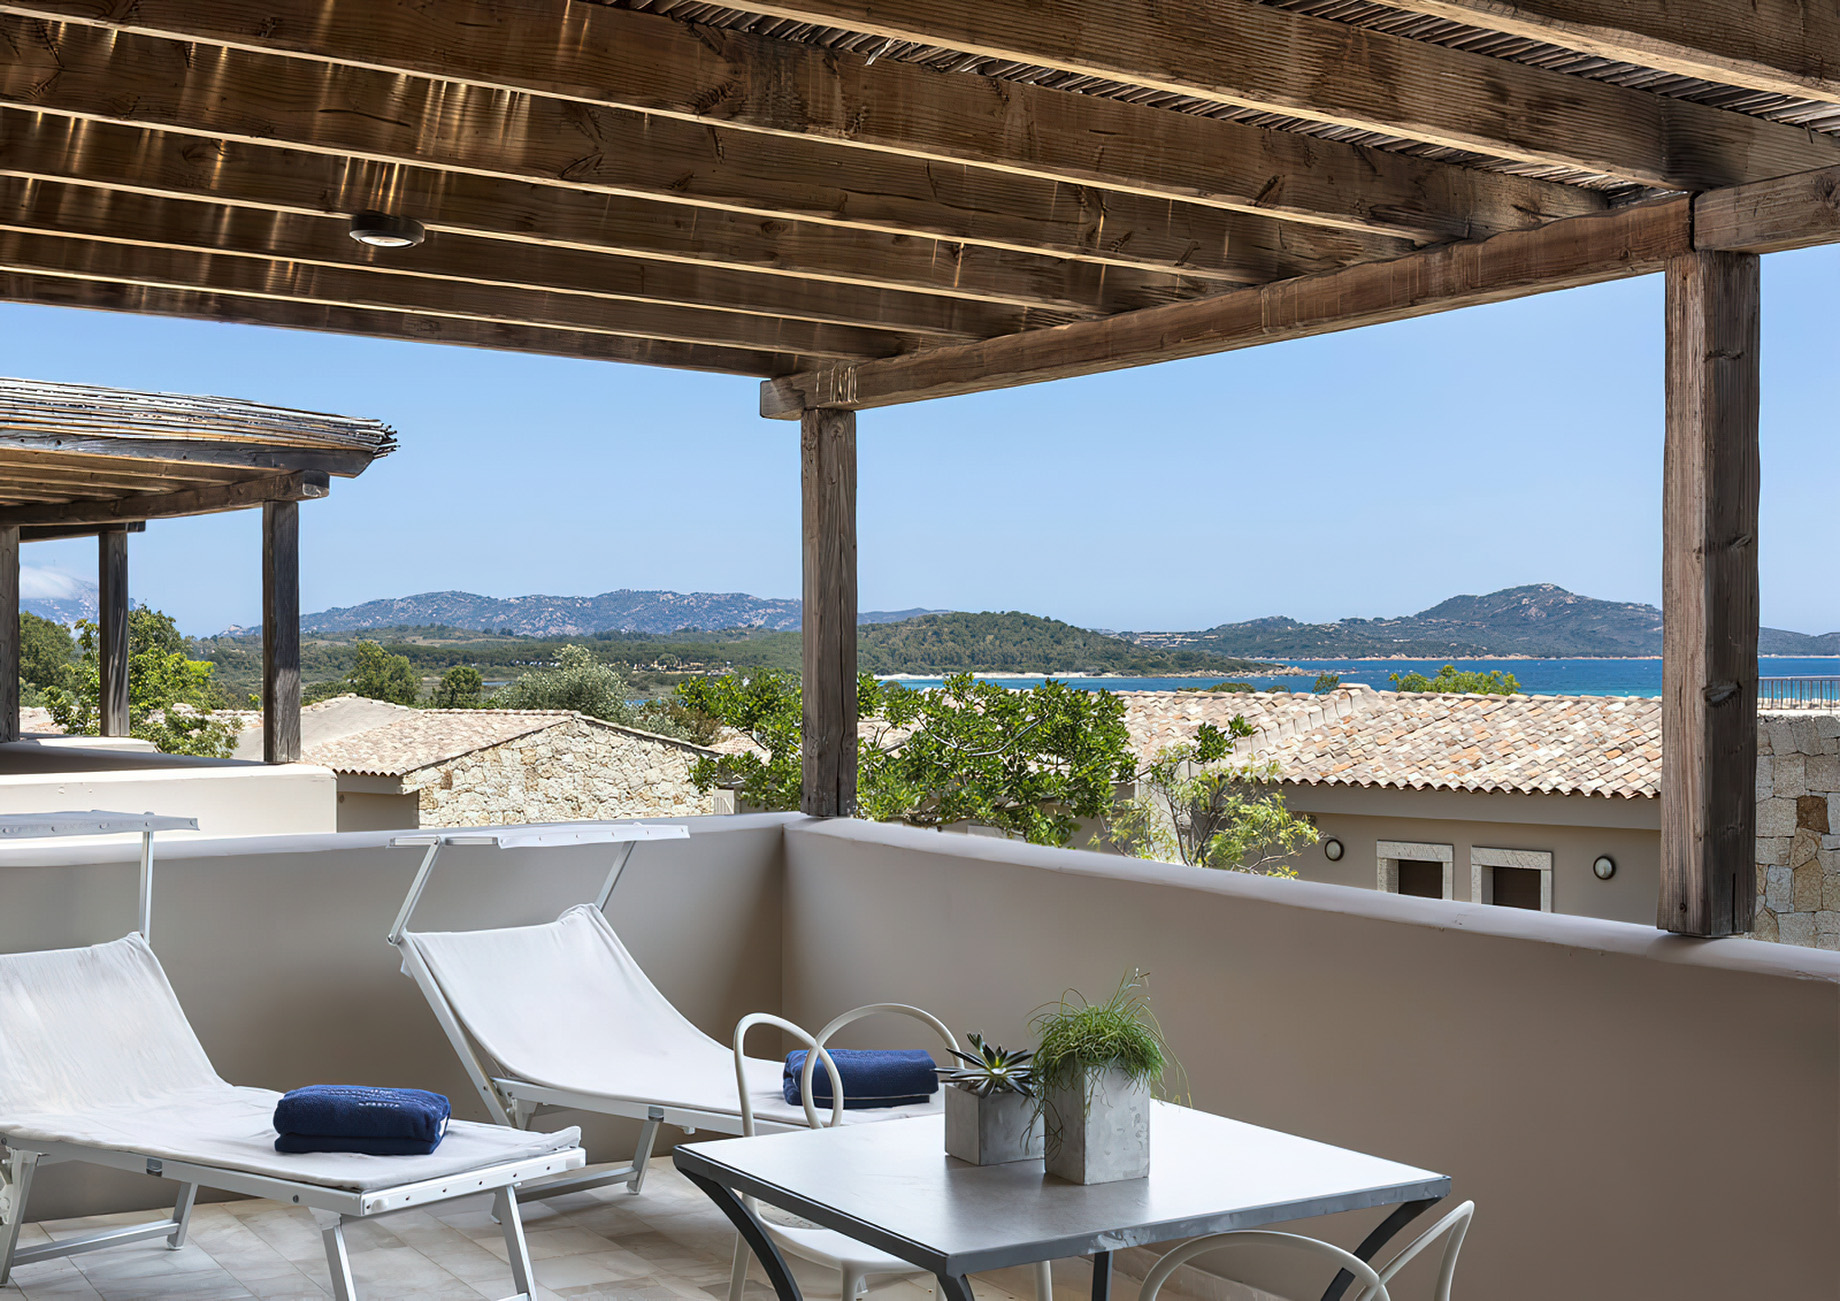 Baglioni Resort Sardinia – San Teodoro, Sardegna, Italy – Sea View Suite Terrace